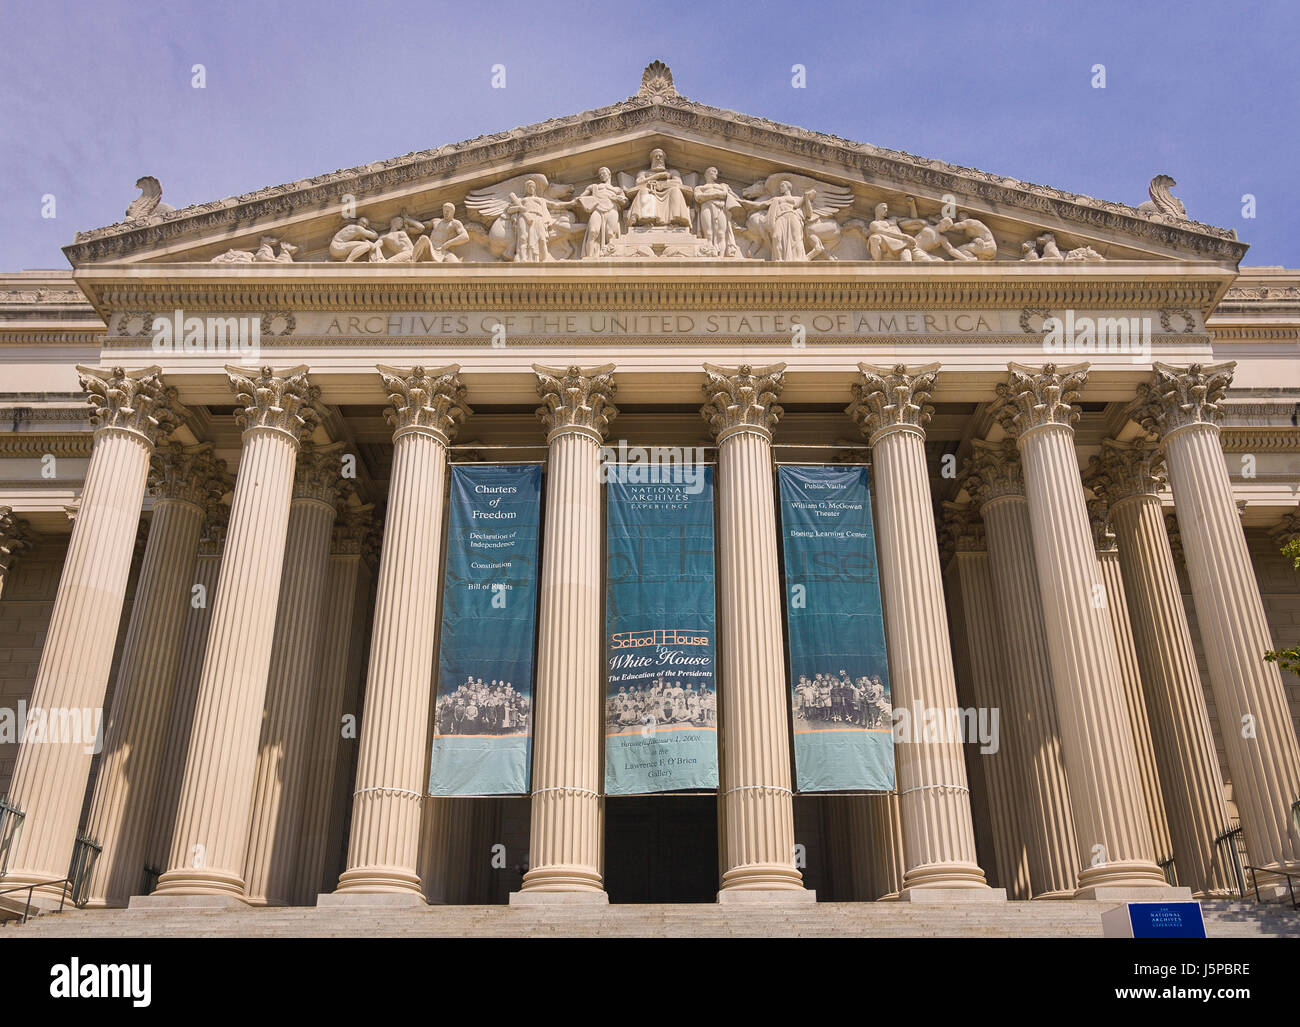 WASHINGTON, DC, USA - The United States National Archives building. Stock Photo